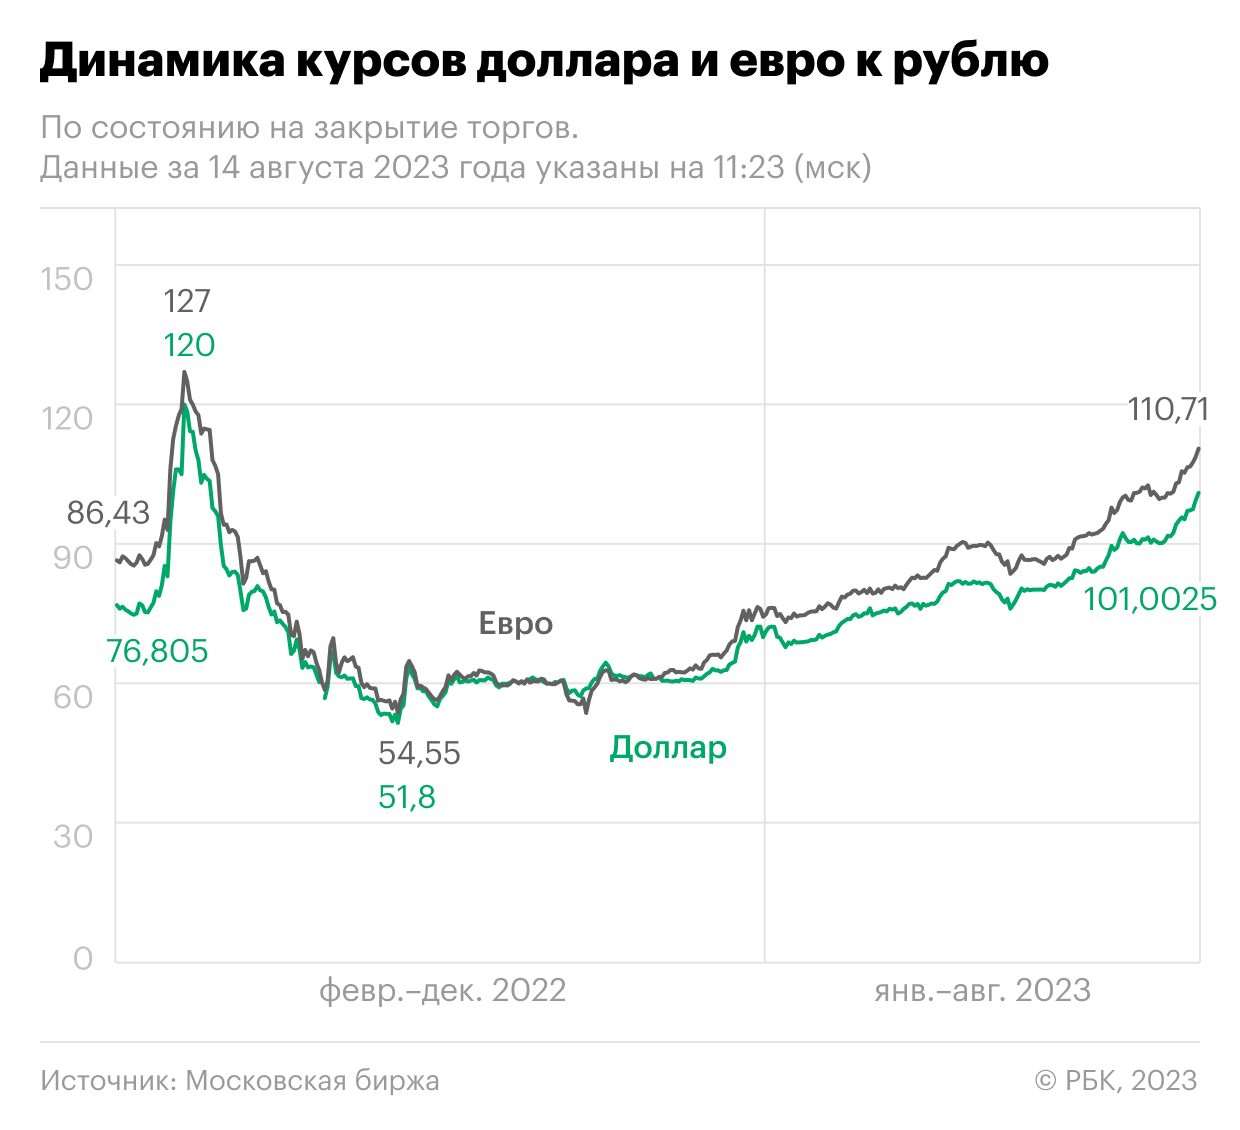 Курс евро рубль на сегодня цб рф. Динамика курса доллара в 2023. Рост доллара в 2023. График доллара 2023. Курс евро 2022.